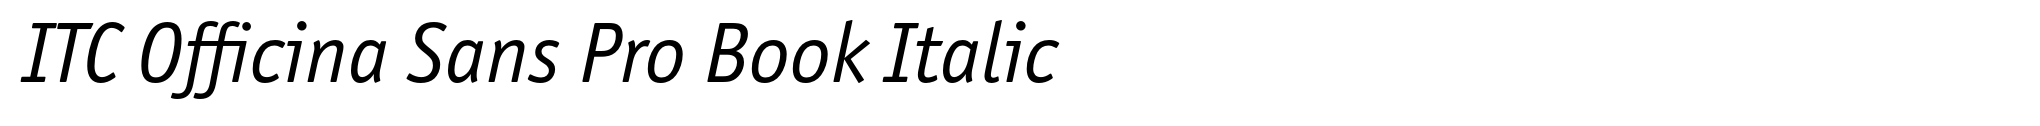 ITC Officina Sans Pro Book Italic image